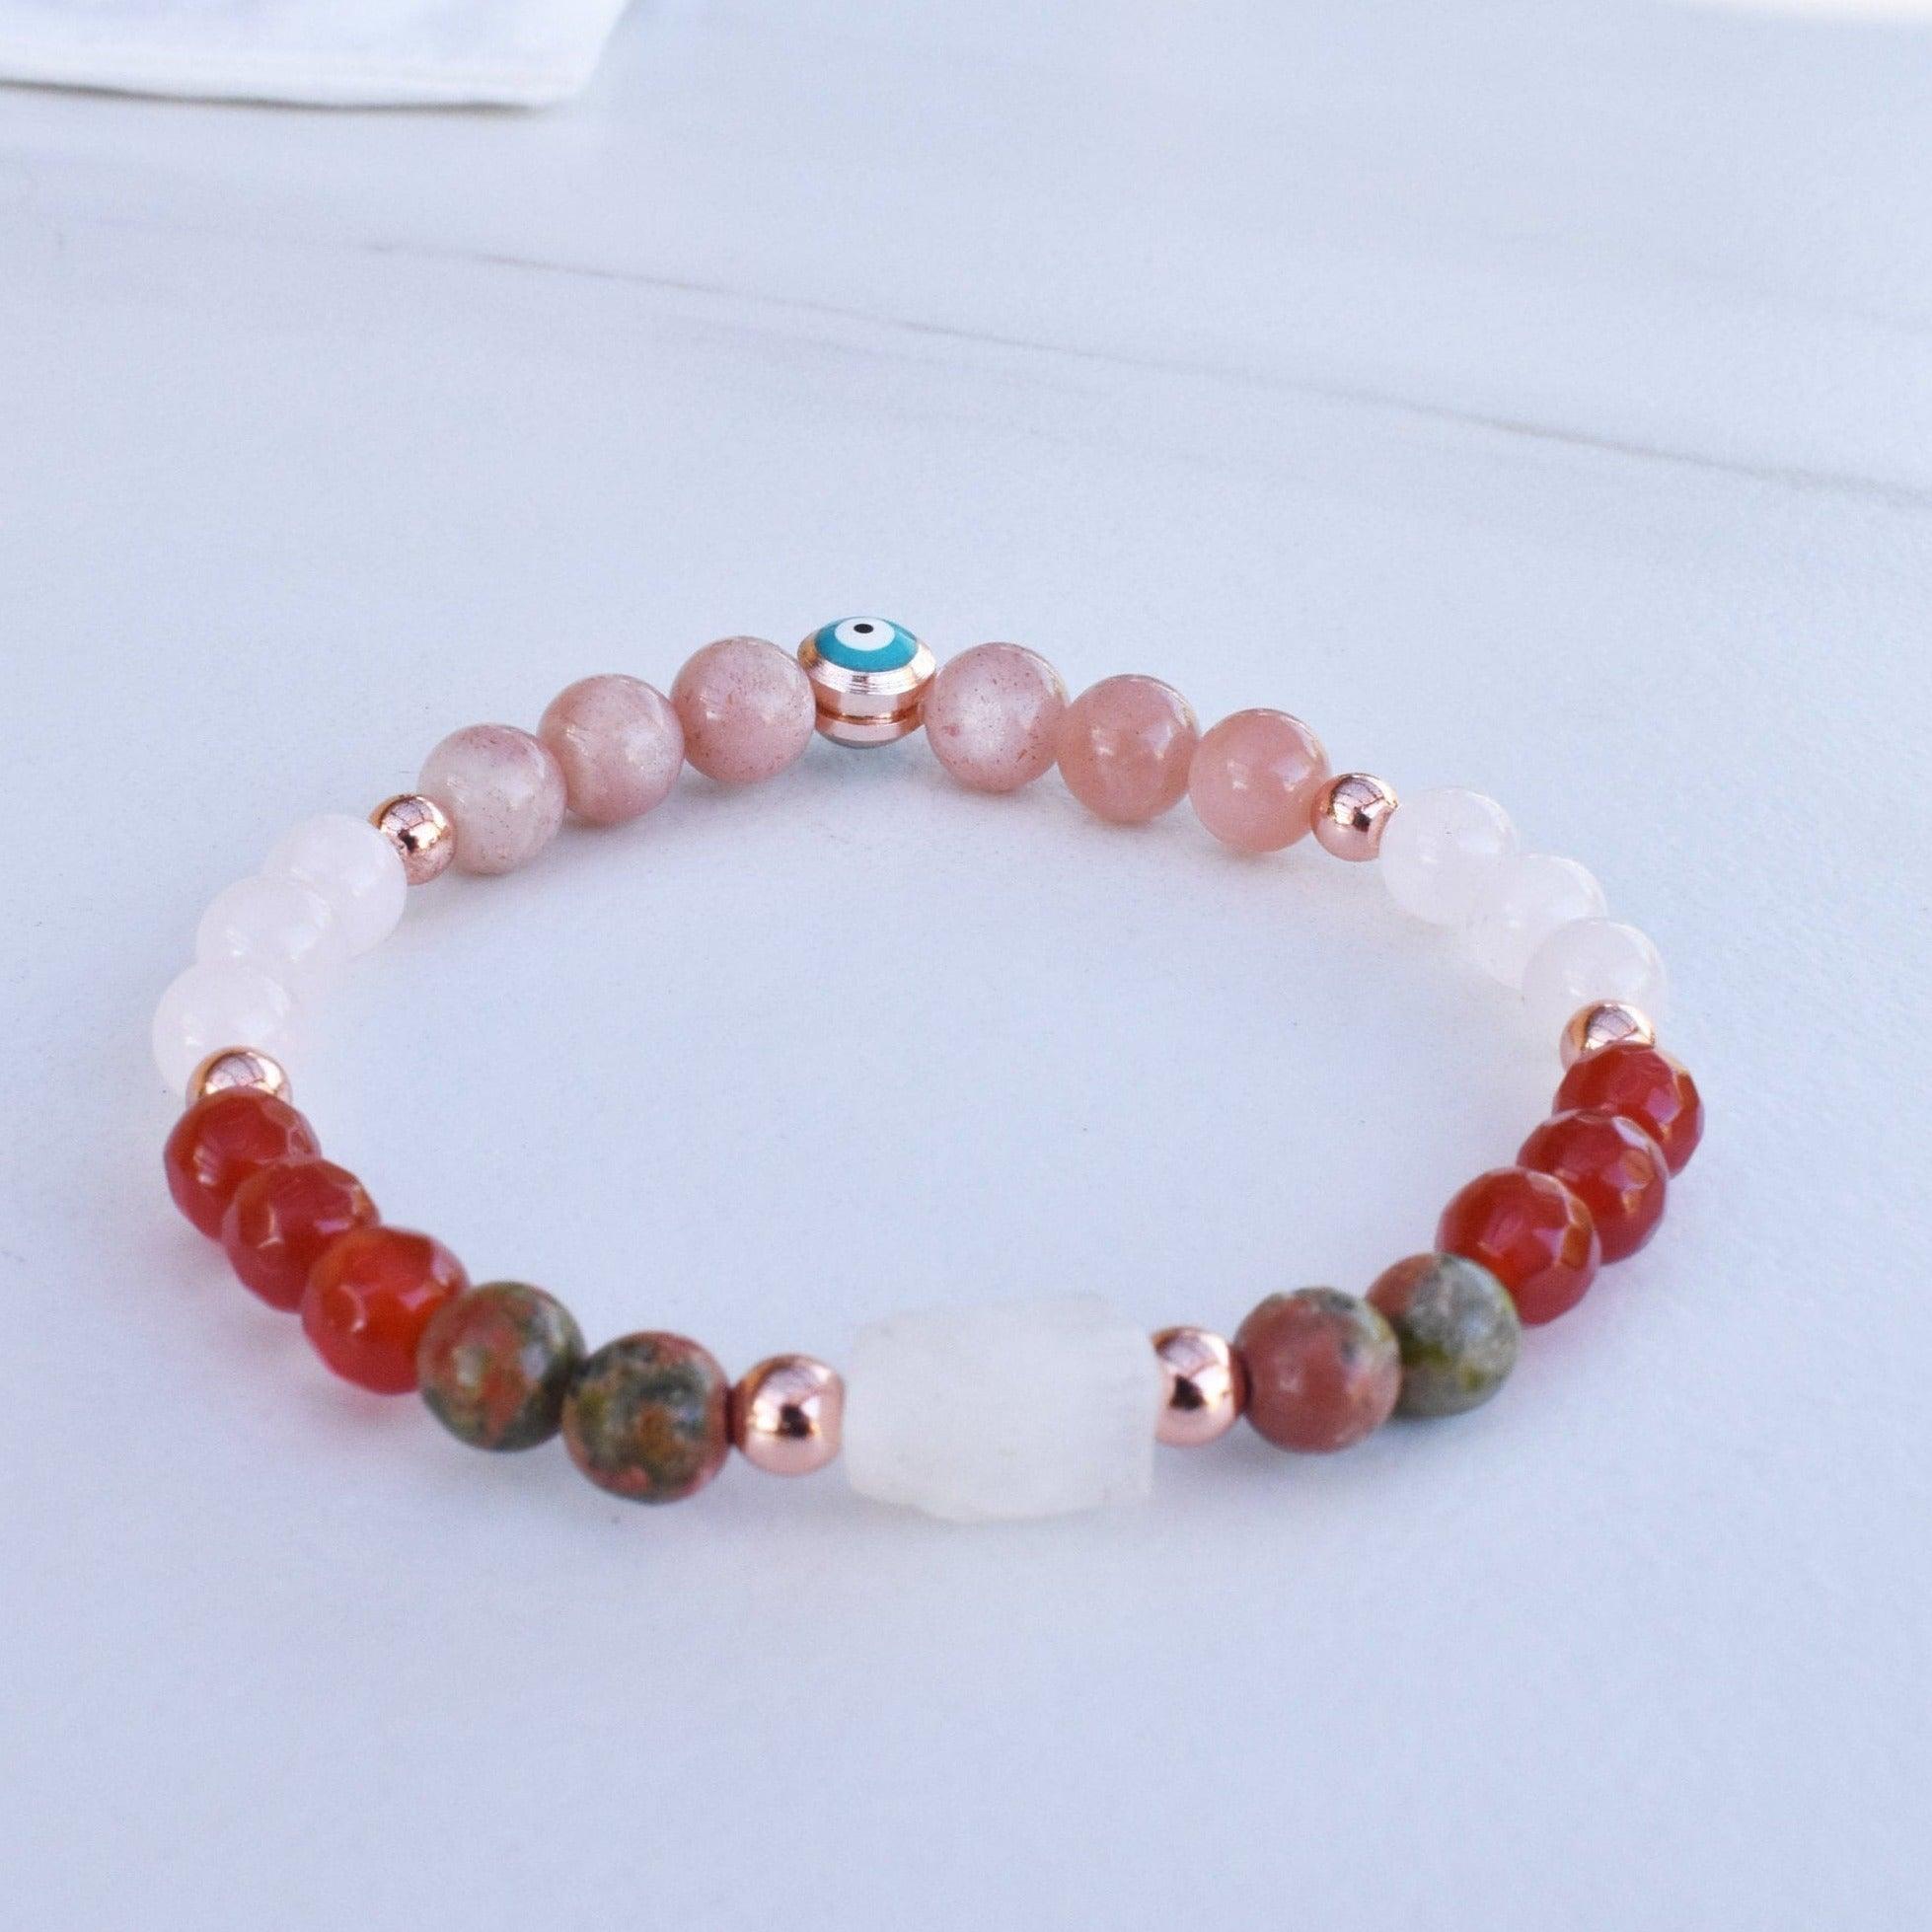 Fertility Gemstone Bracelet Infused with Reiki Energy to Help with your Fertility Journey. 